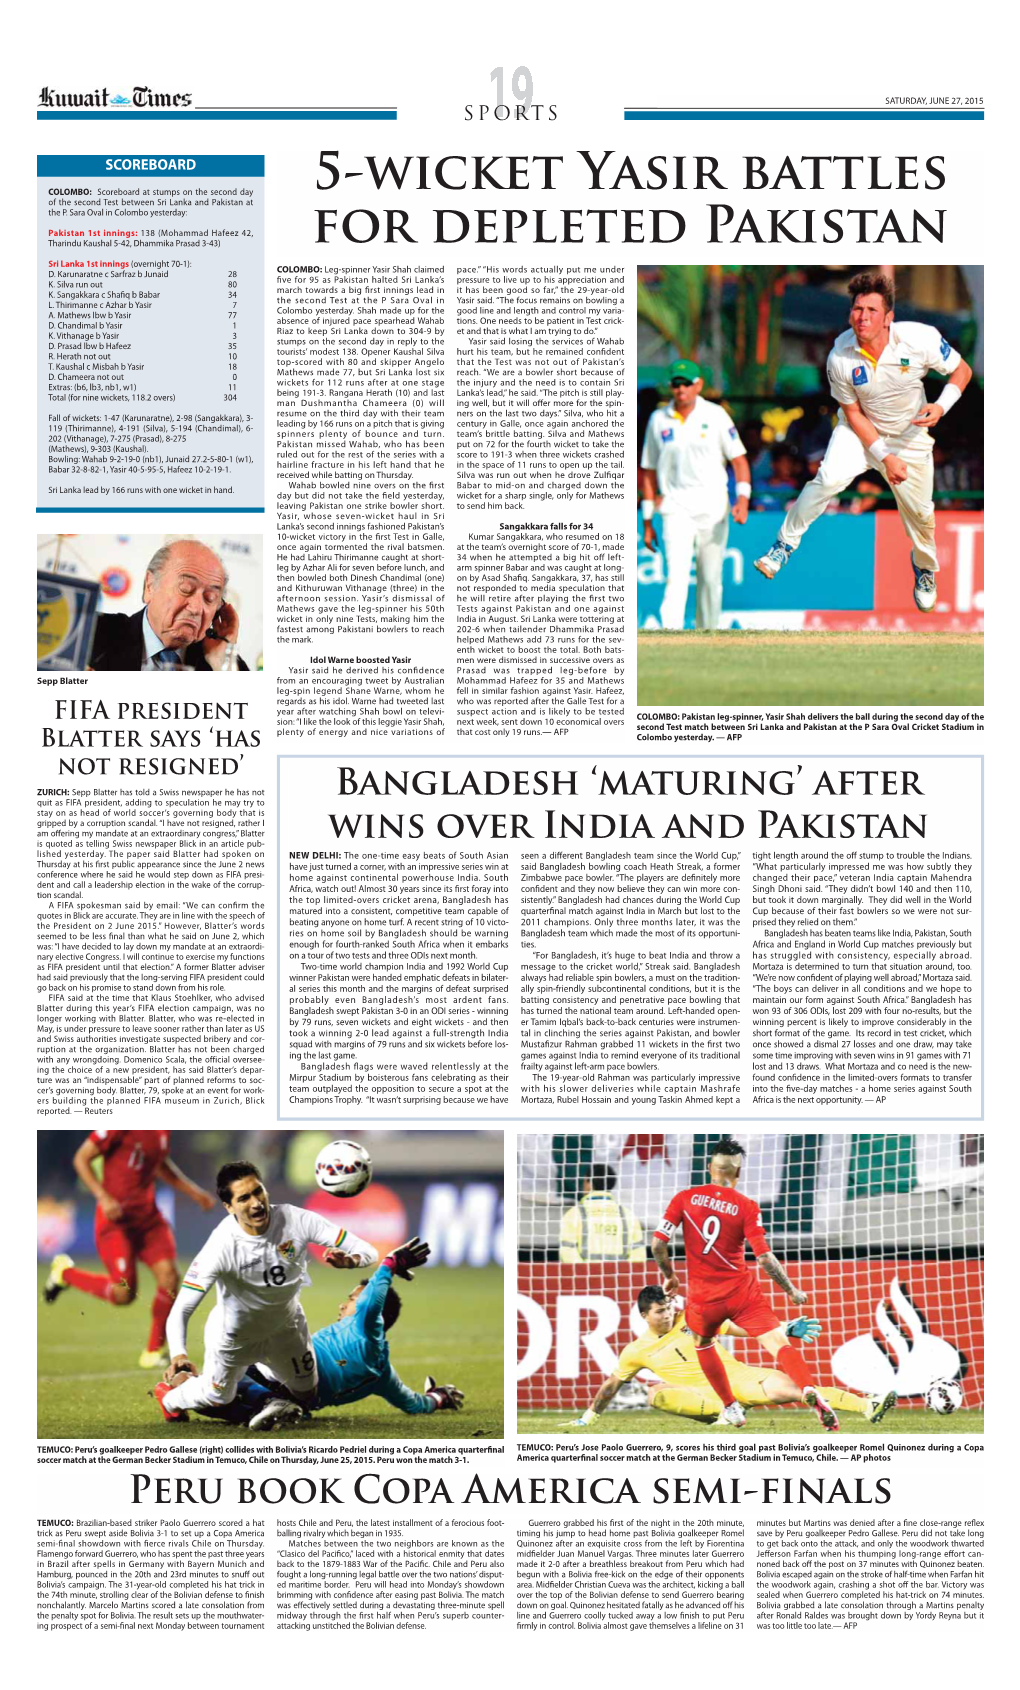 5-Wicket Yasir Battles for Depleted Pakistan